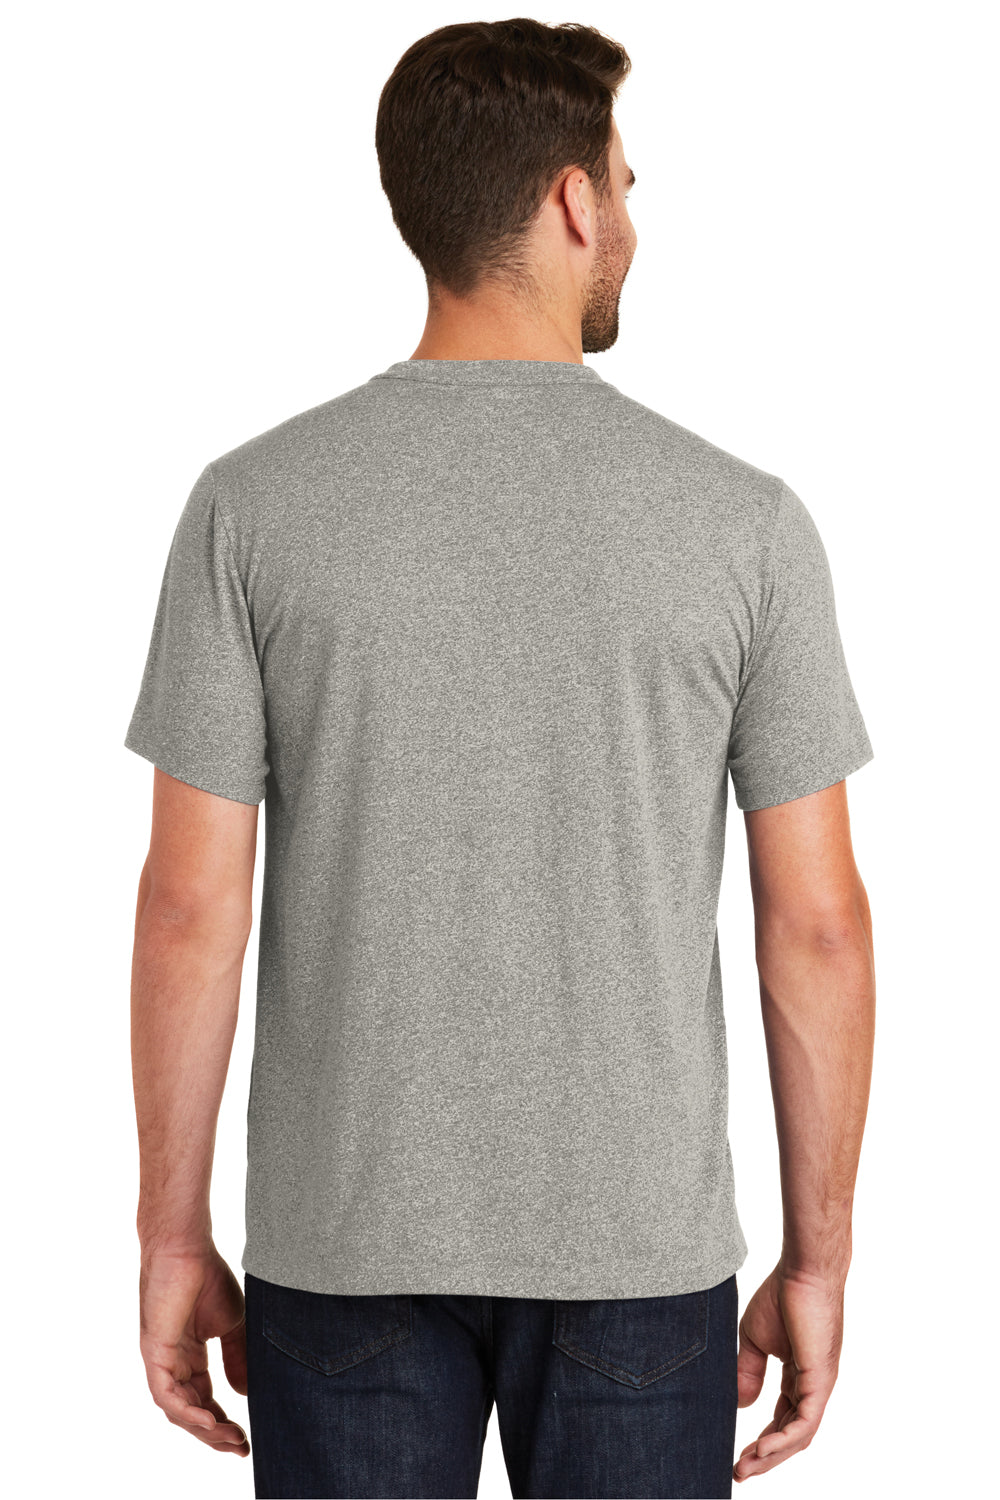 New Era NEA100 Mens Heritage Short Sleeve Crewneck T-Shirt Heather Rainstorm Grey Back